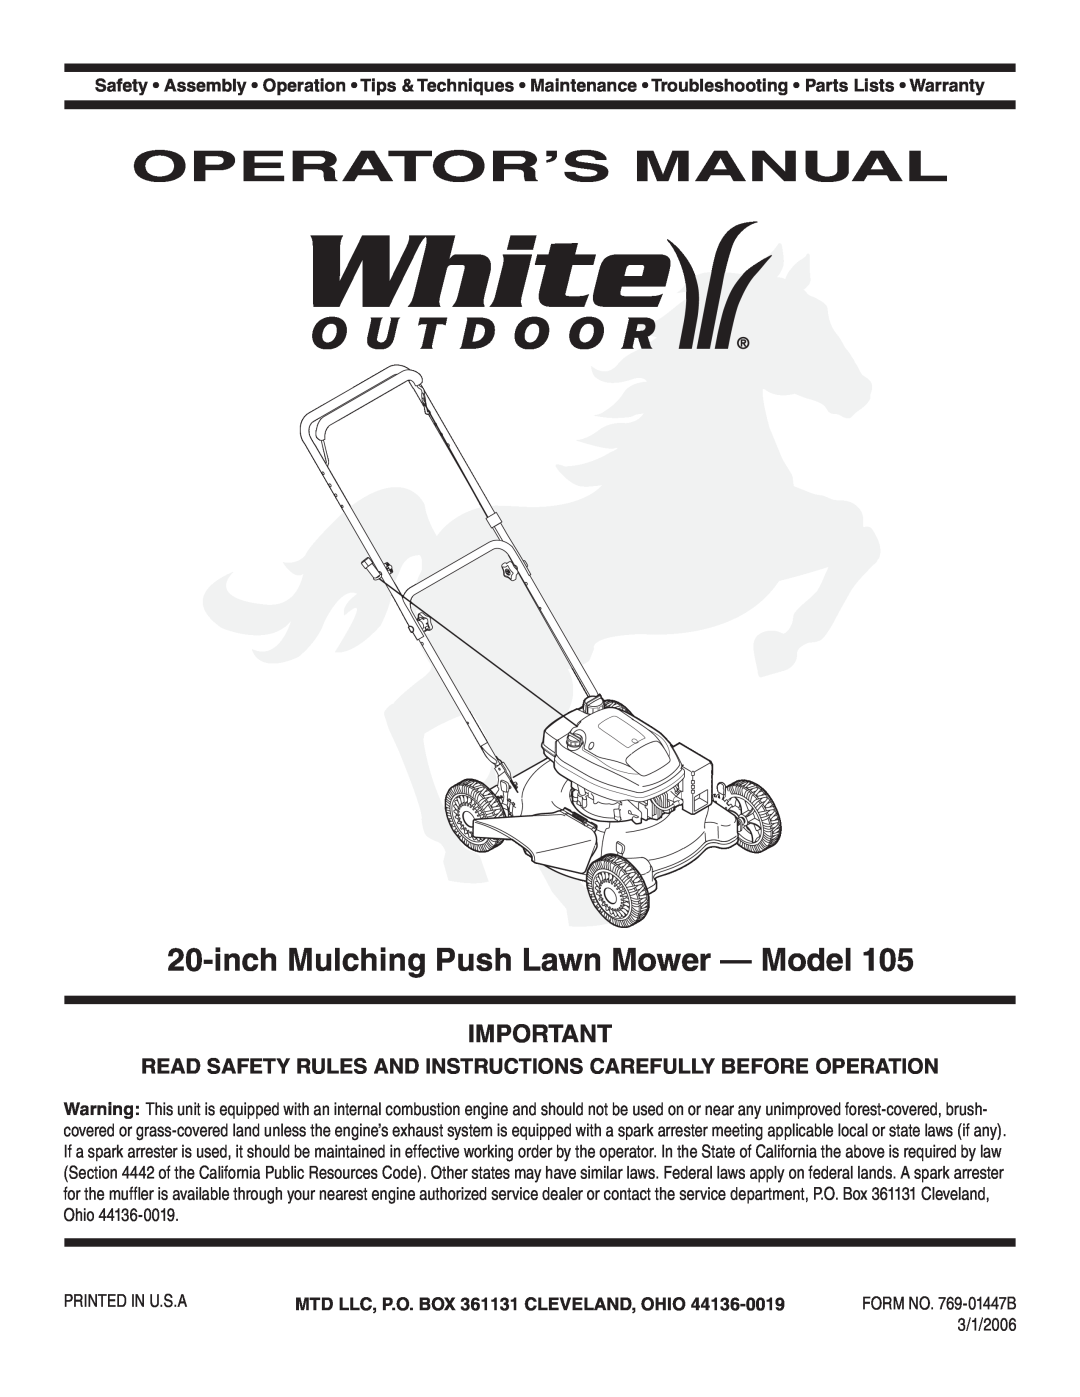 White Outdoor 105 warranty Operator’S Manual, inch Mulching Push Lawn Mower - Model 